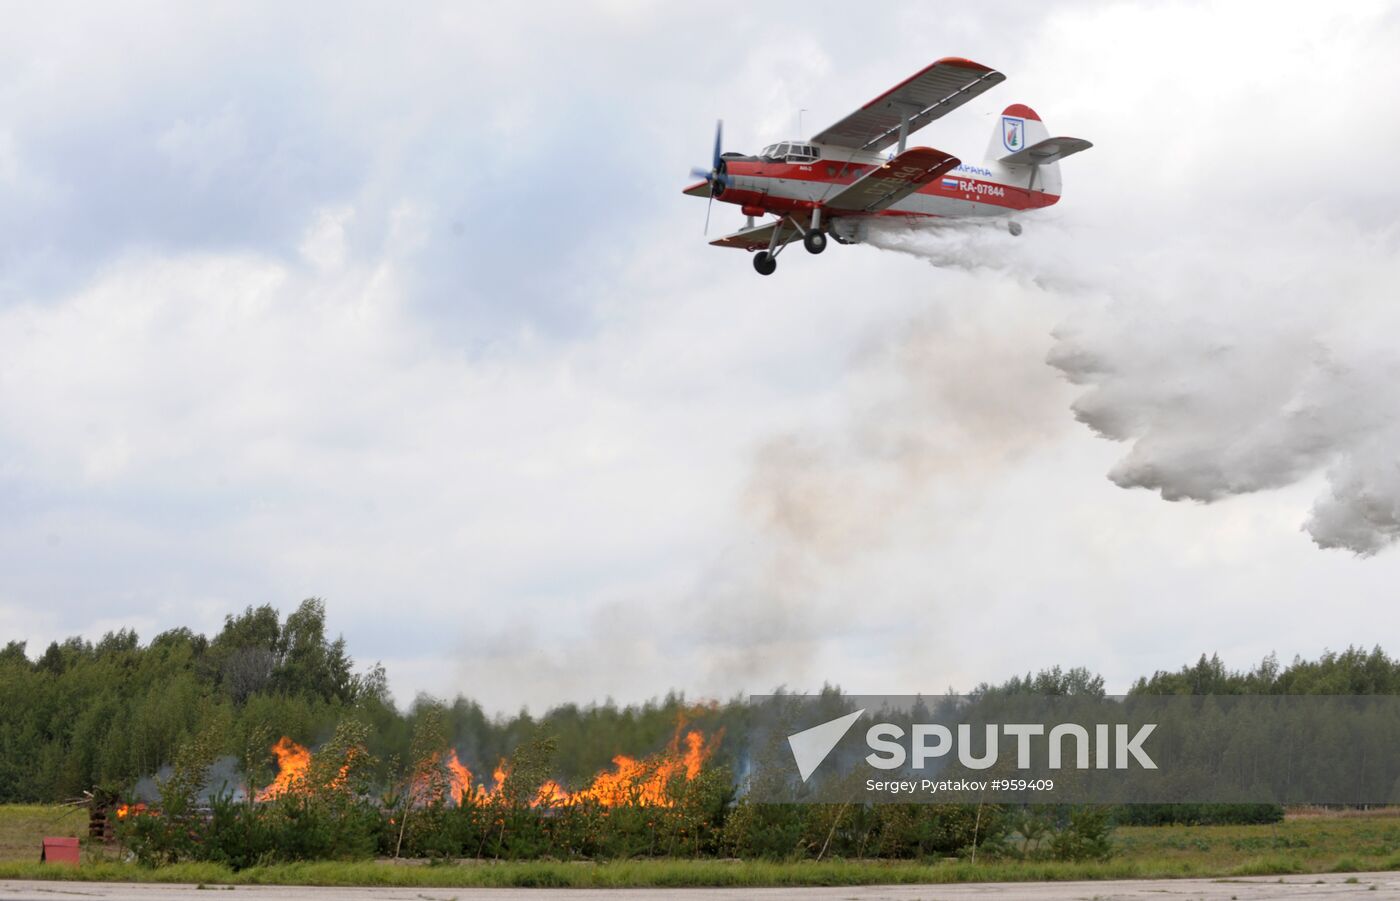 Wildfire suppression equipment exhibition in Vladimir